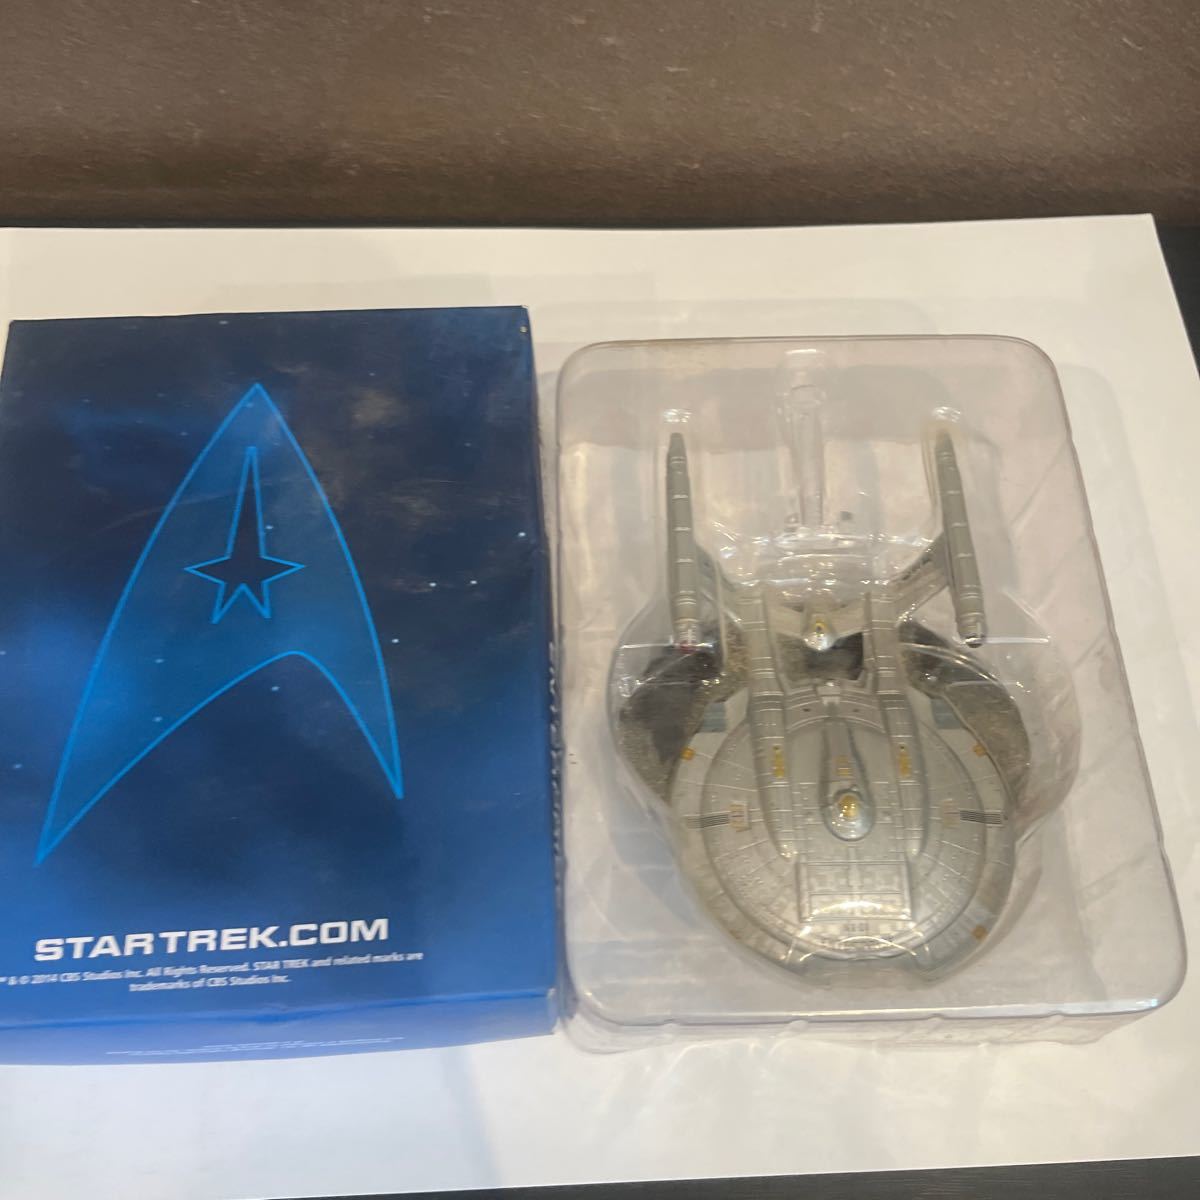  Star Trek Star магазин коллекция фигурка 